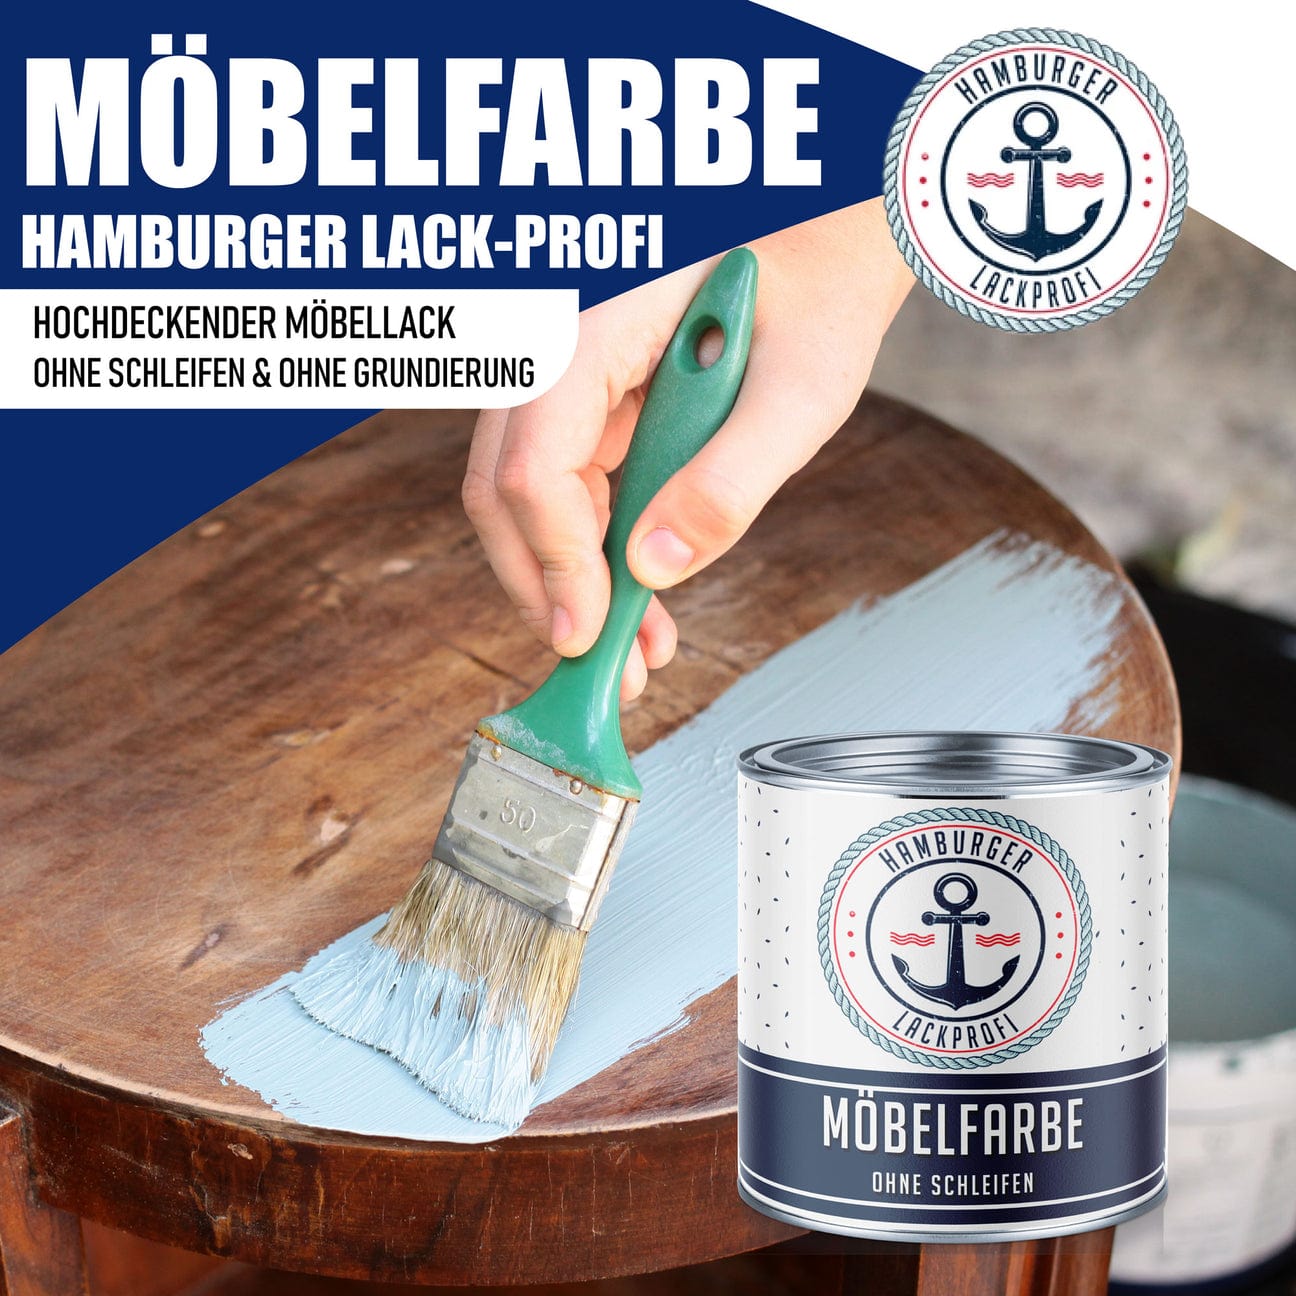 Hamburger Lack-Profi Möbelfarbe ohne Schleifen RAL 5000 Violettblau - Möbellack Hamburger Lack-Profi